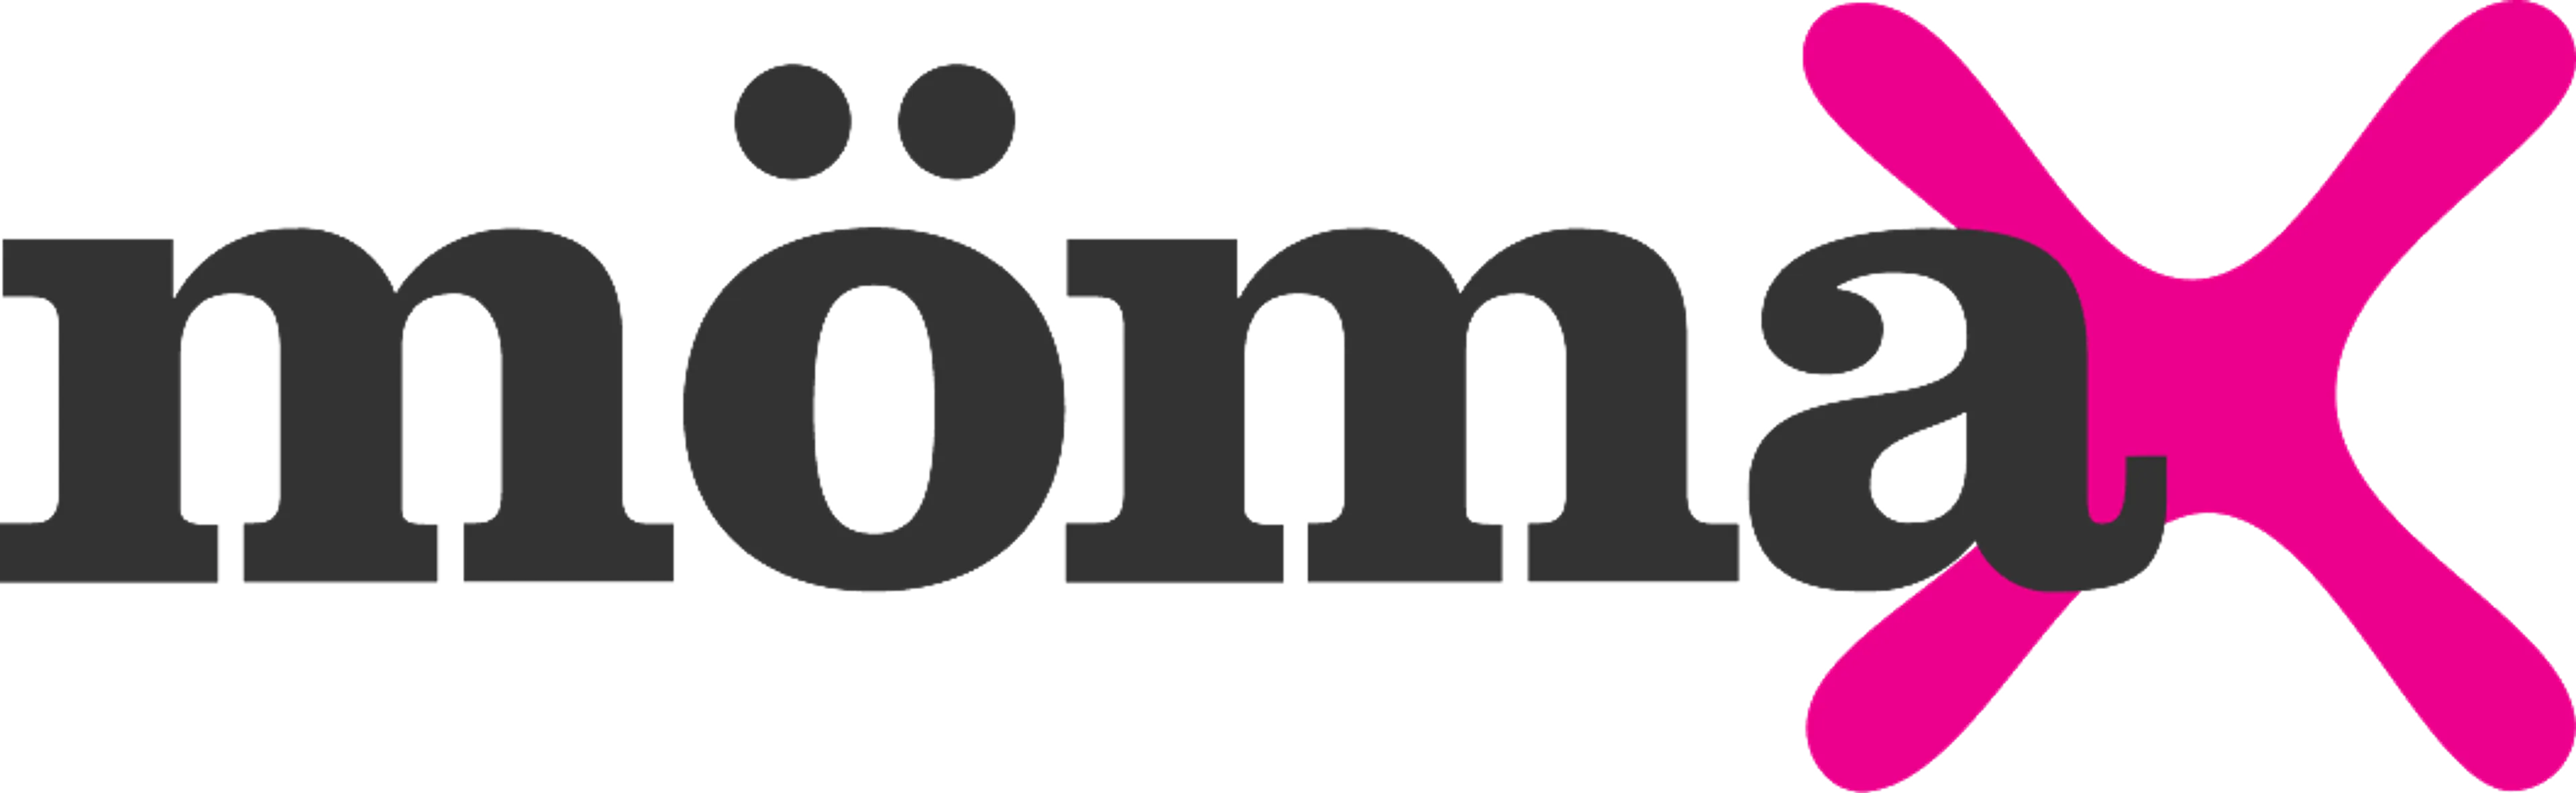 MÖMAX logo